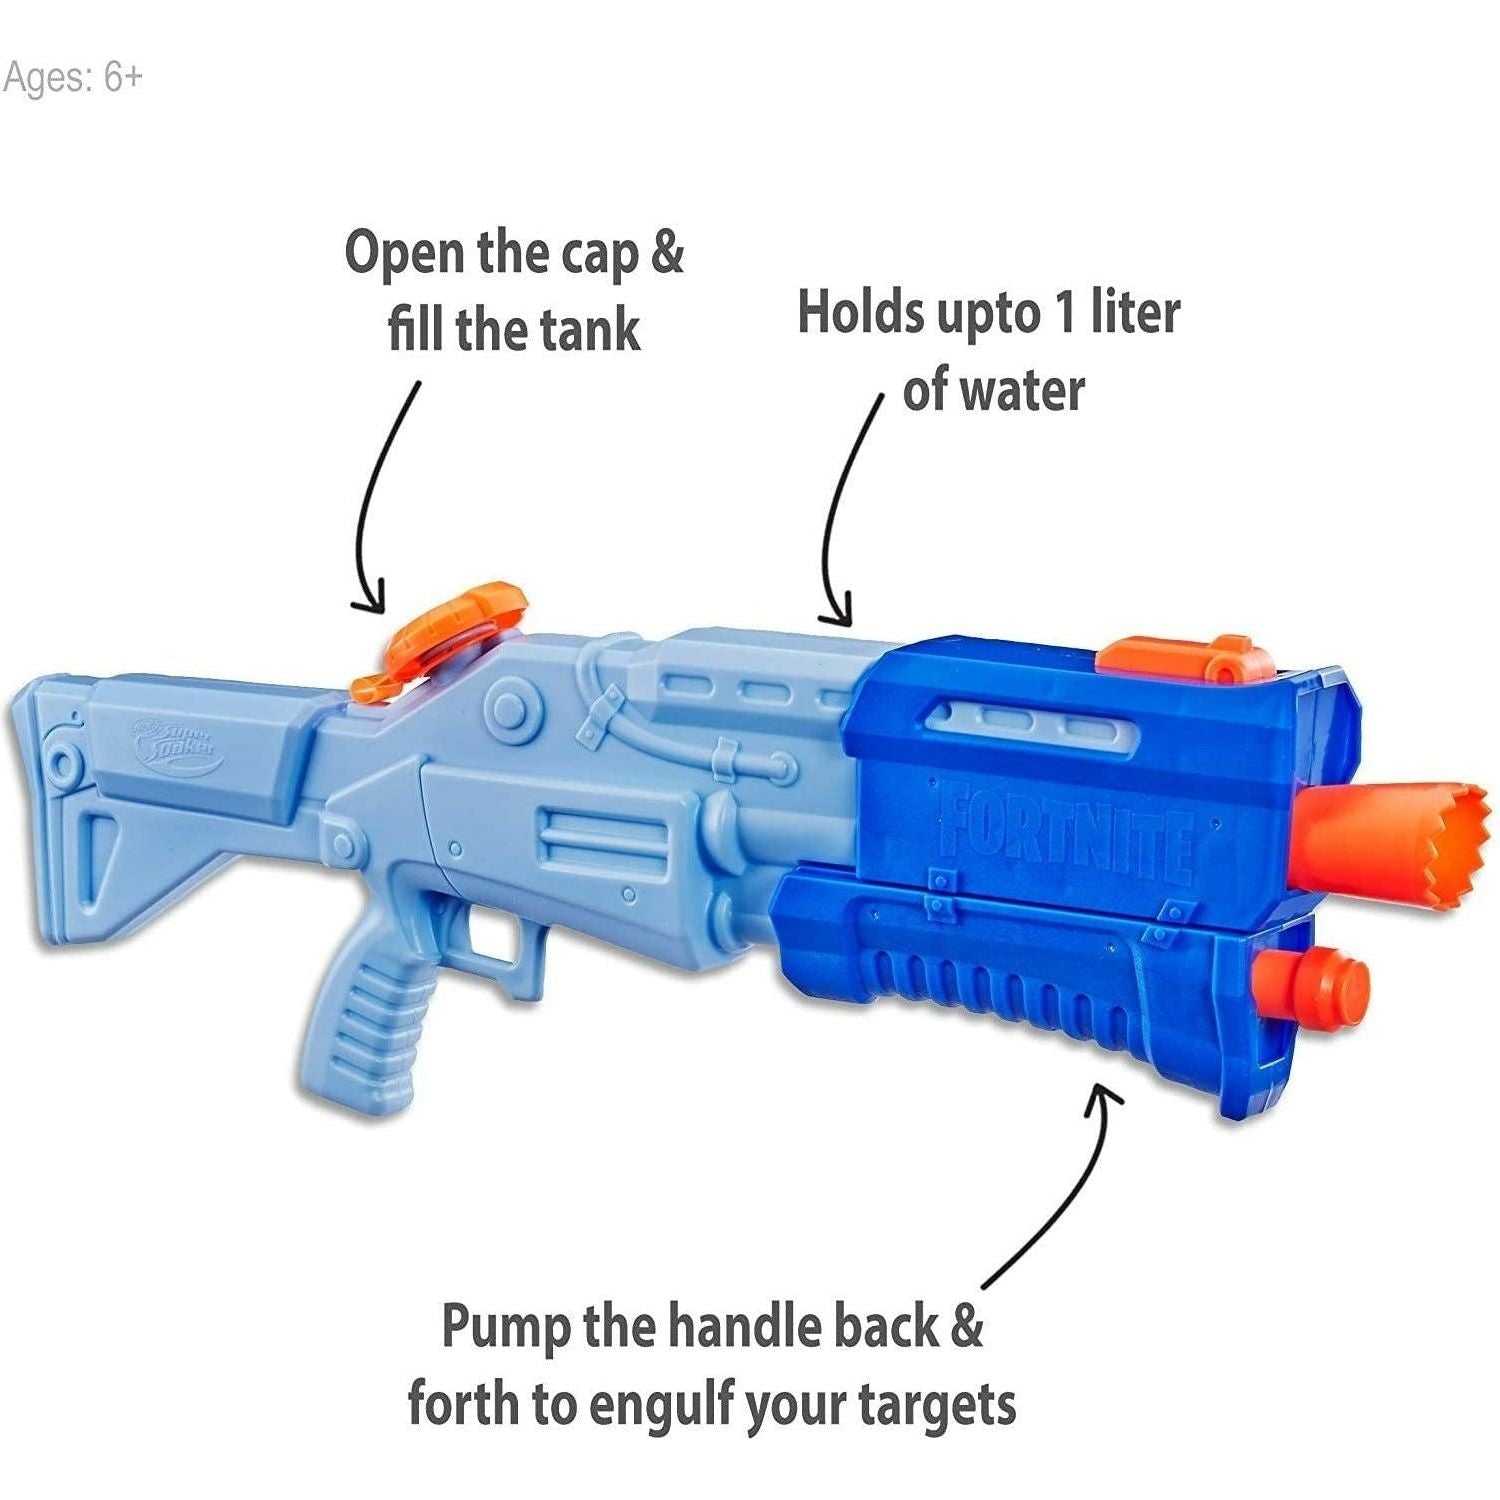 NERF Fortnite TS-R Super Soaker Water Blaster Toy , Blue - BumbleToys - 6+ Years, Blasters, Blasters & Water Pistols, Boys, Fortnite, Guns, Pre-Order